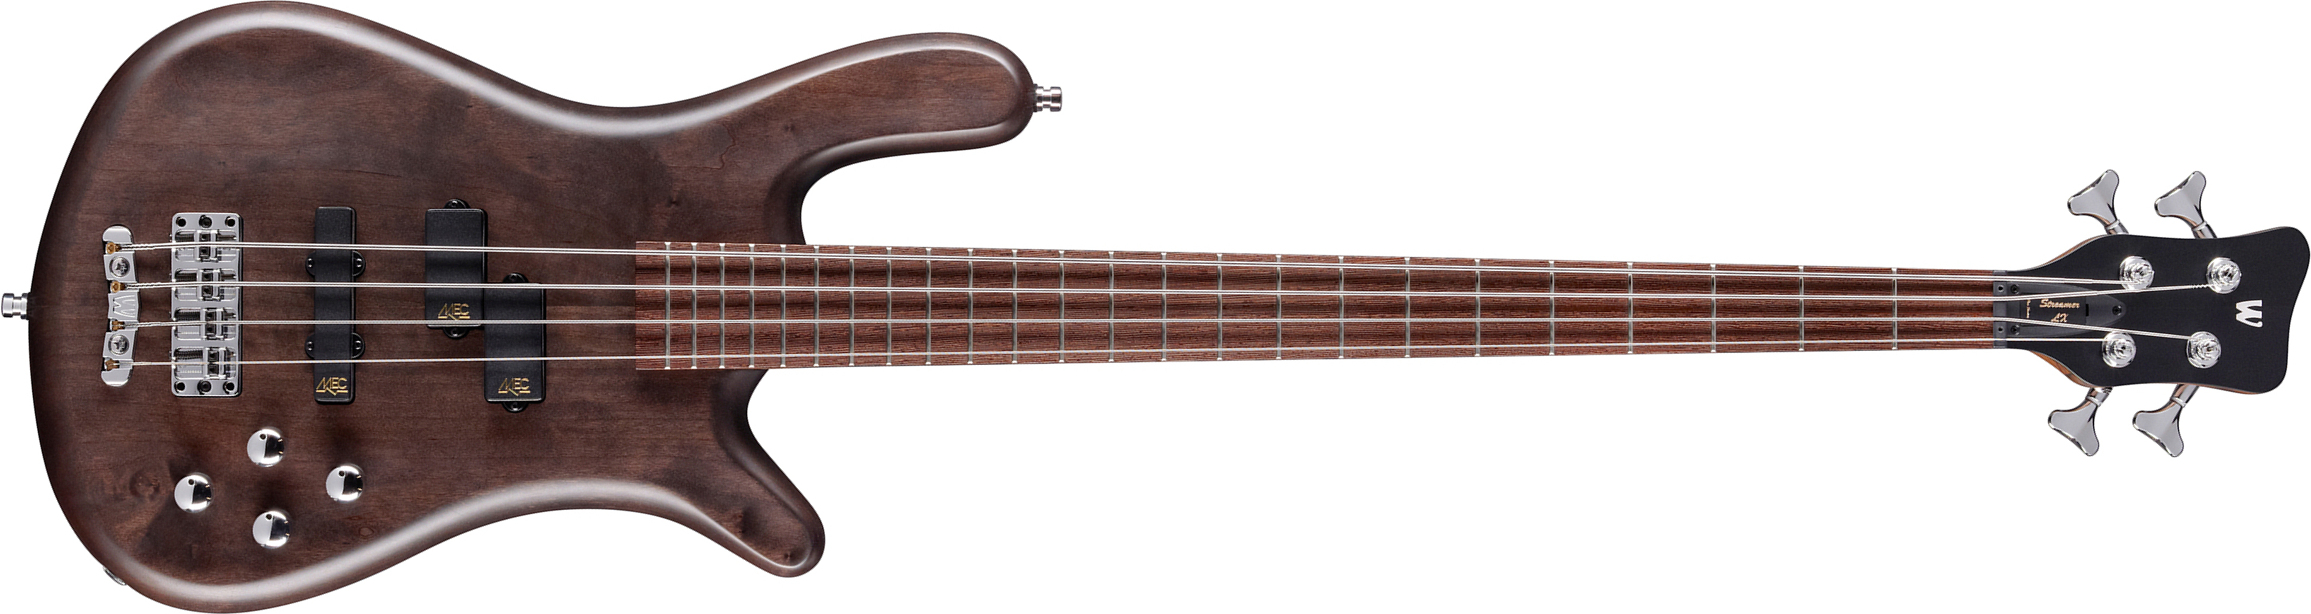 Warwick Streamer Lx4 Pro Gps 4c Active Wen - Nirvana Black Satin - Solid body electric bass - Main picture